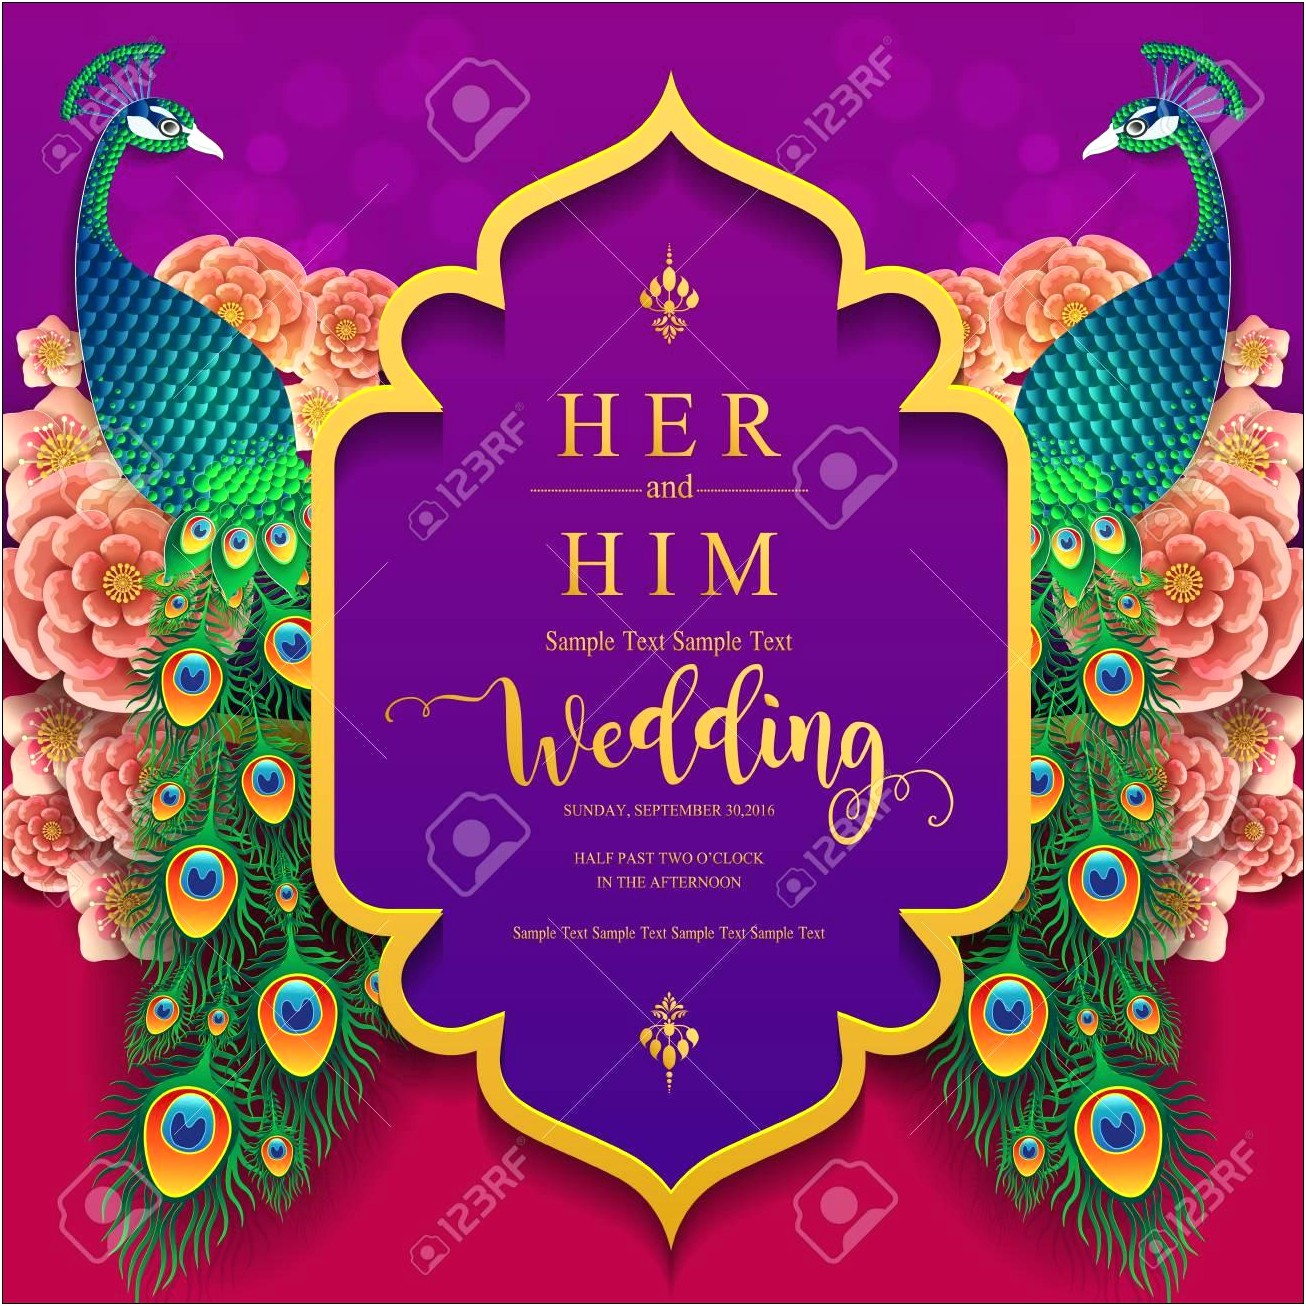 Free Indian Wedding Invitation Cards Designs